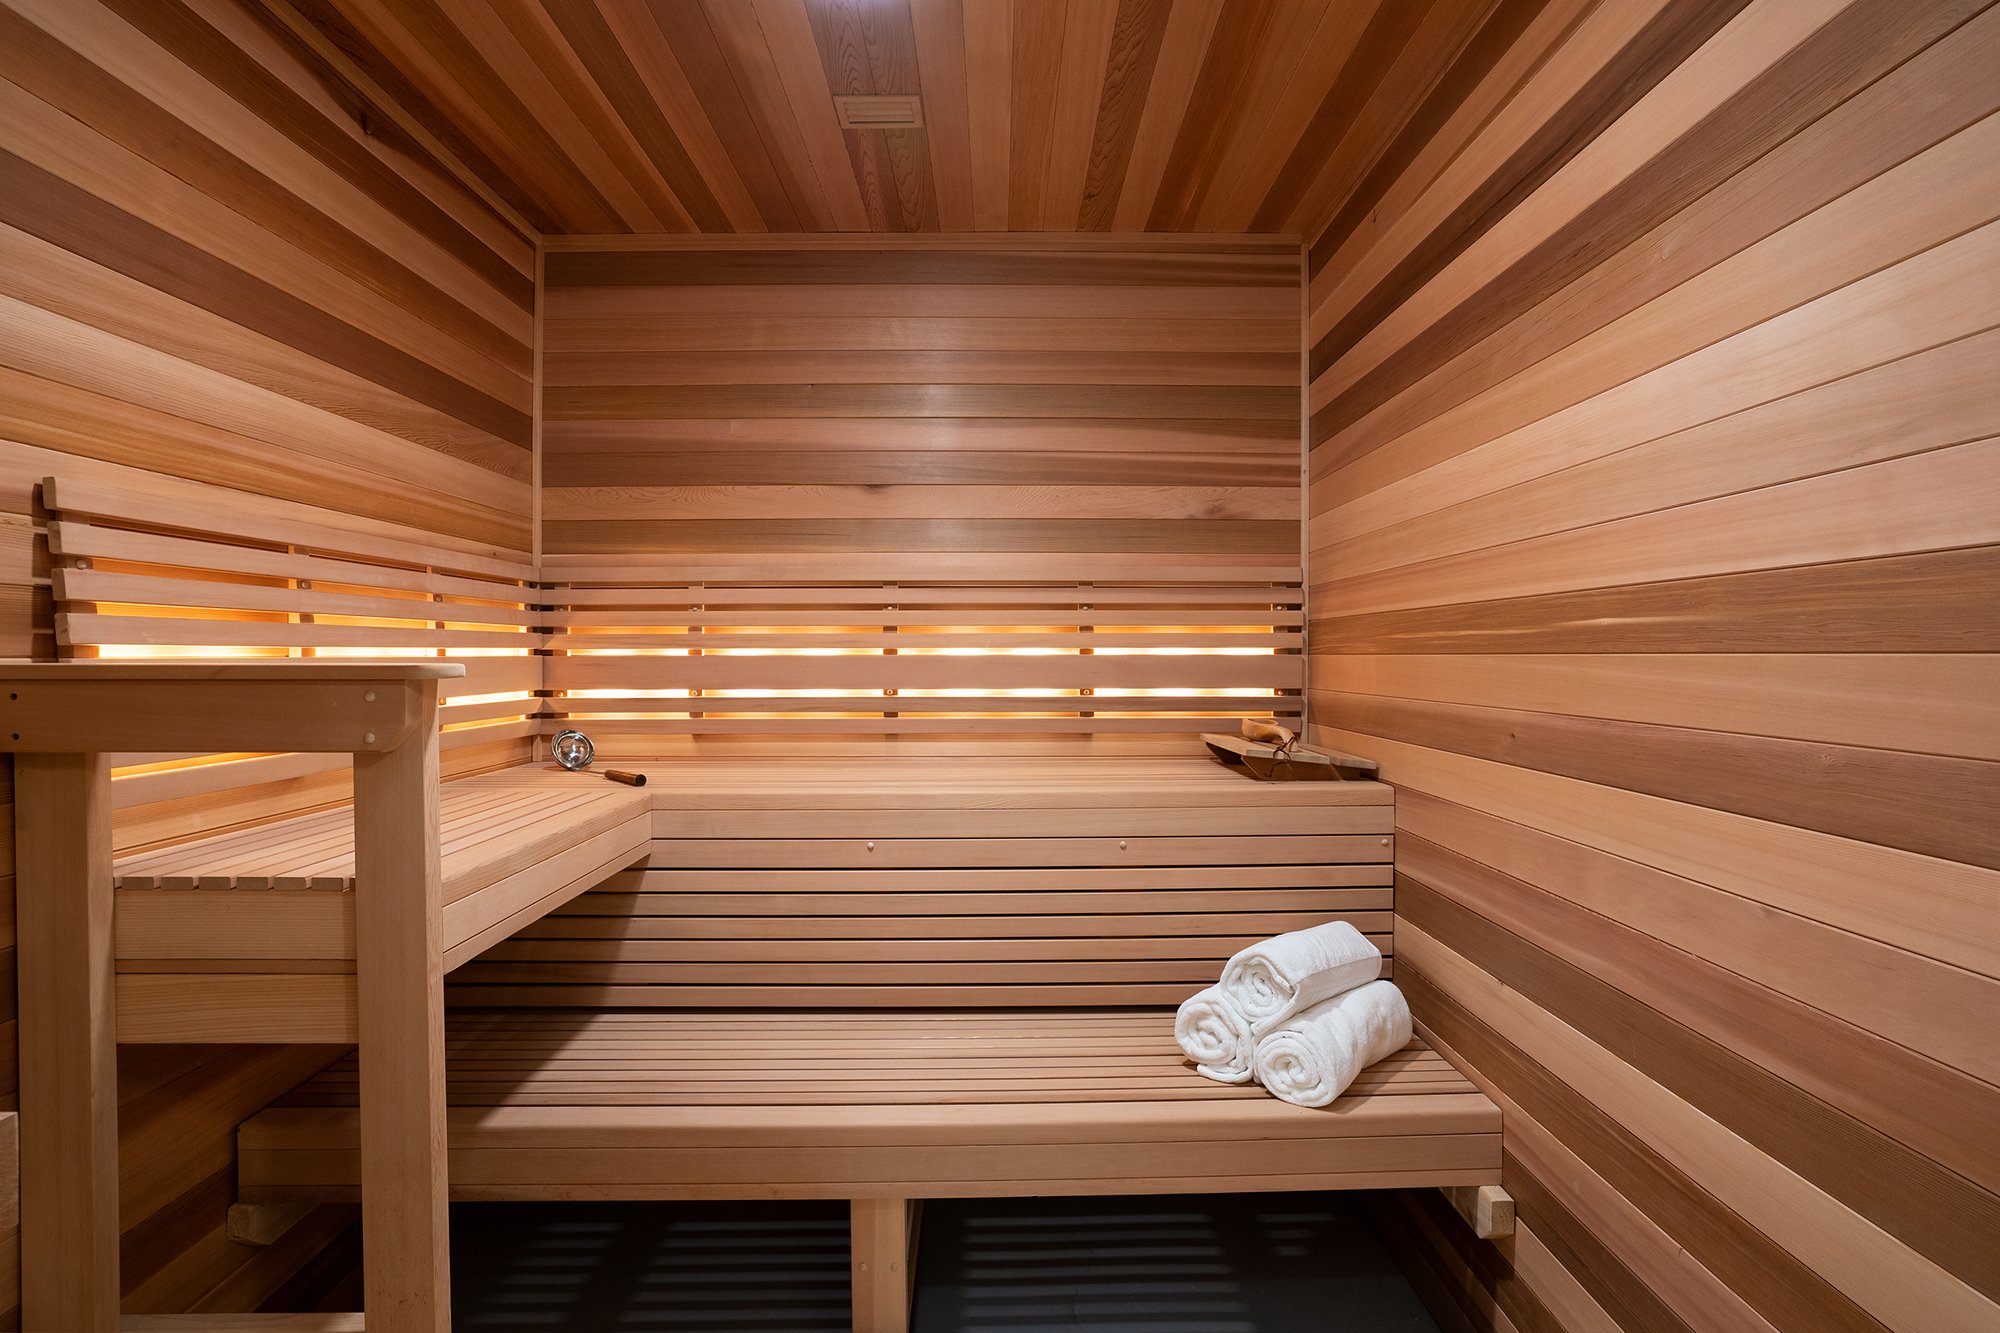 Tahoe Beach Club's spa features a modern wood sauna and fresh, white towels.